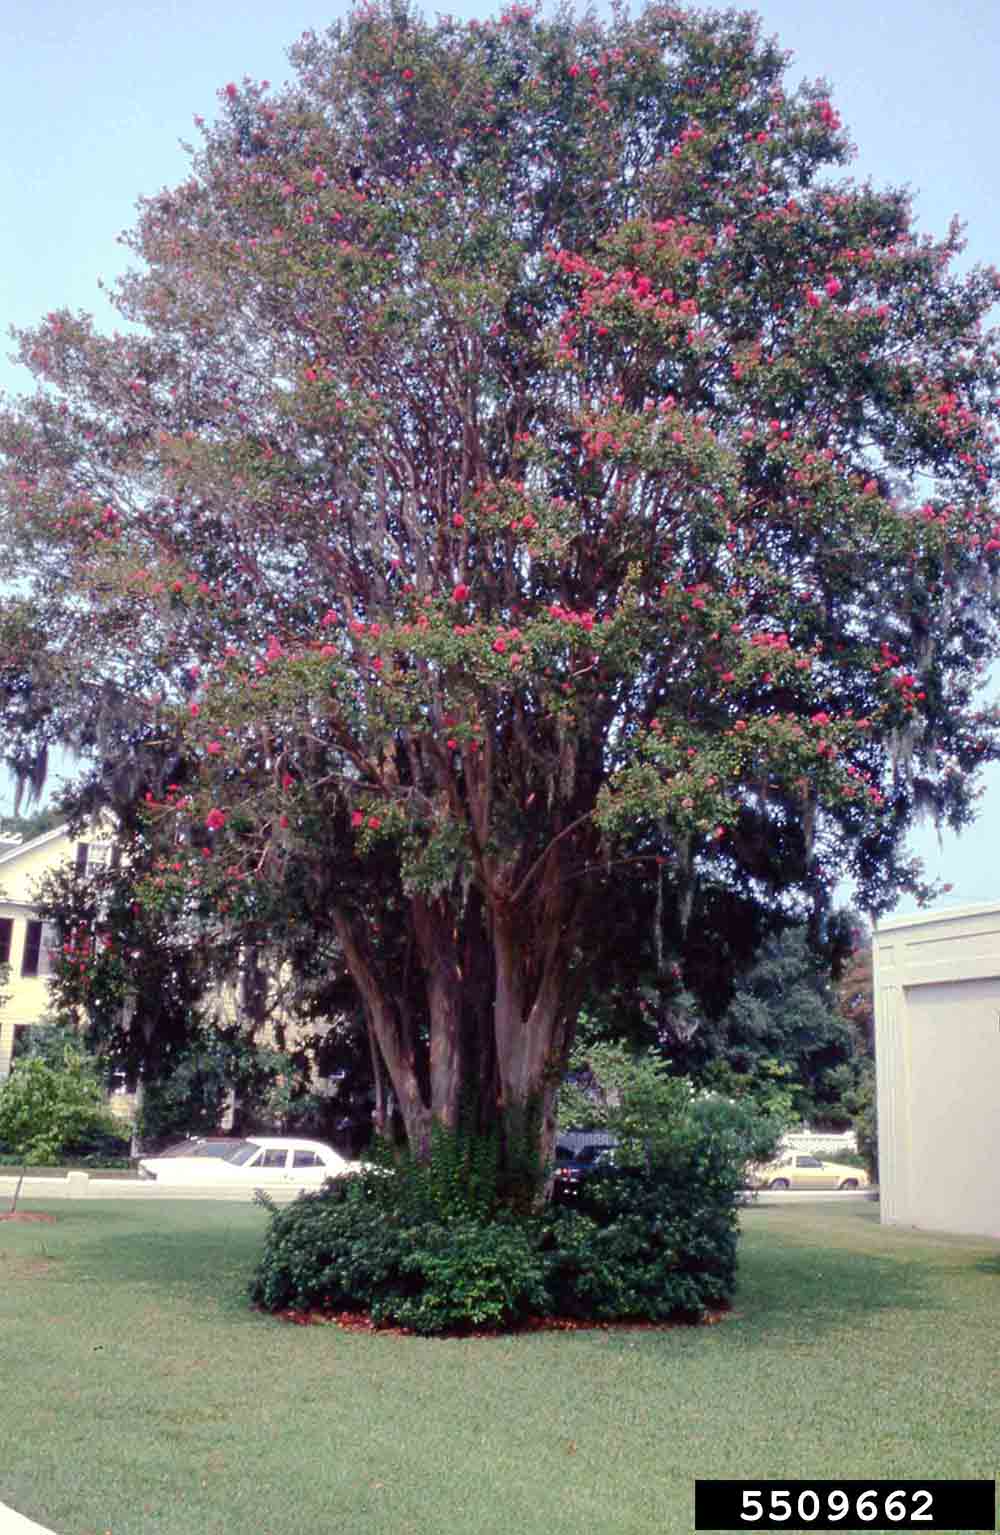 Crape myrtle tree, mature form